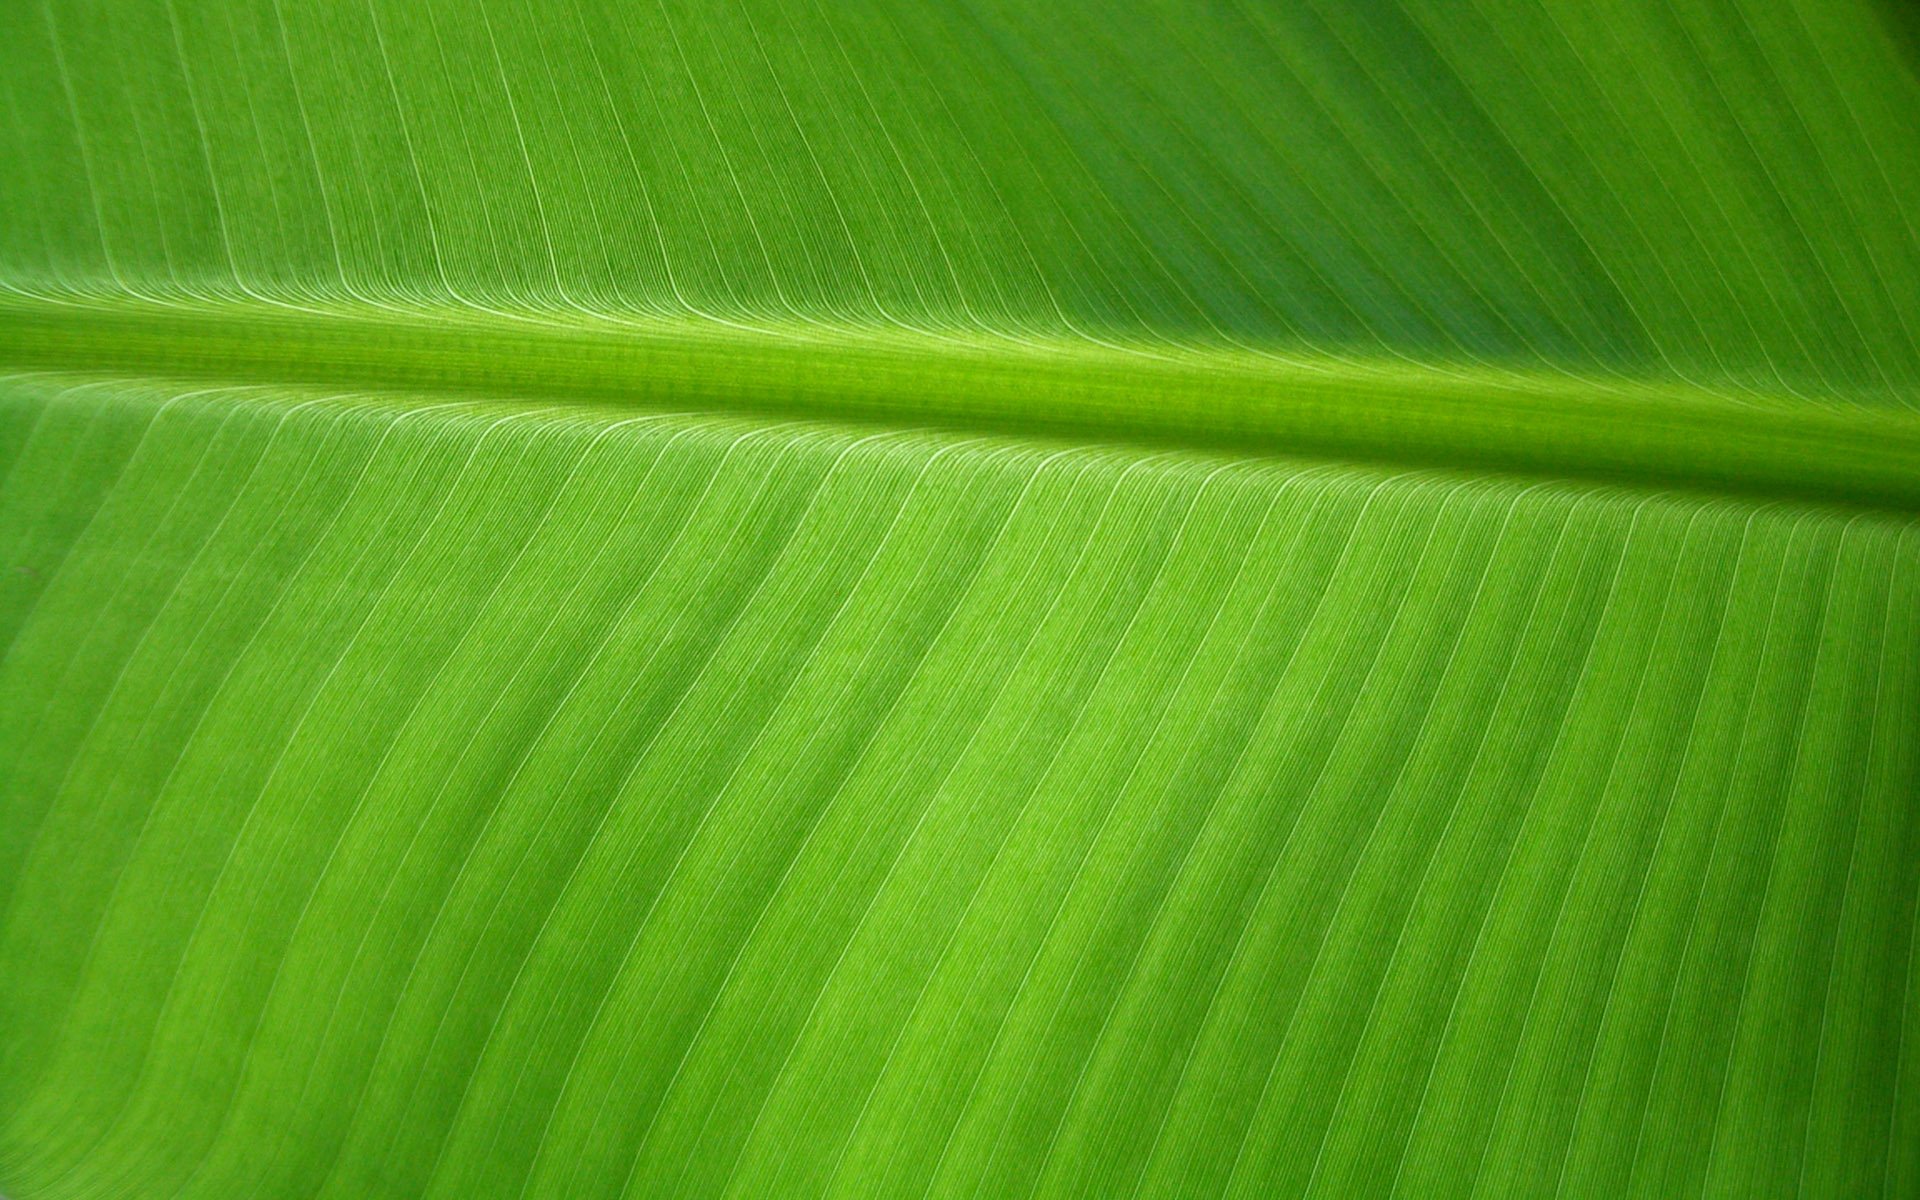 Banana Leaf by OrodrethC on